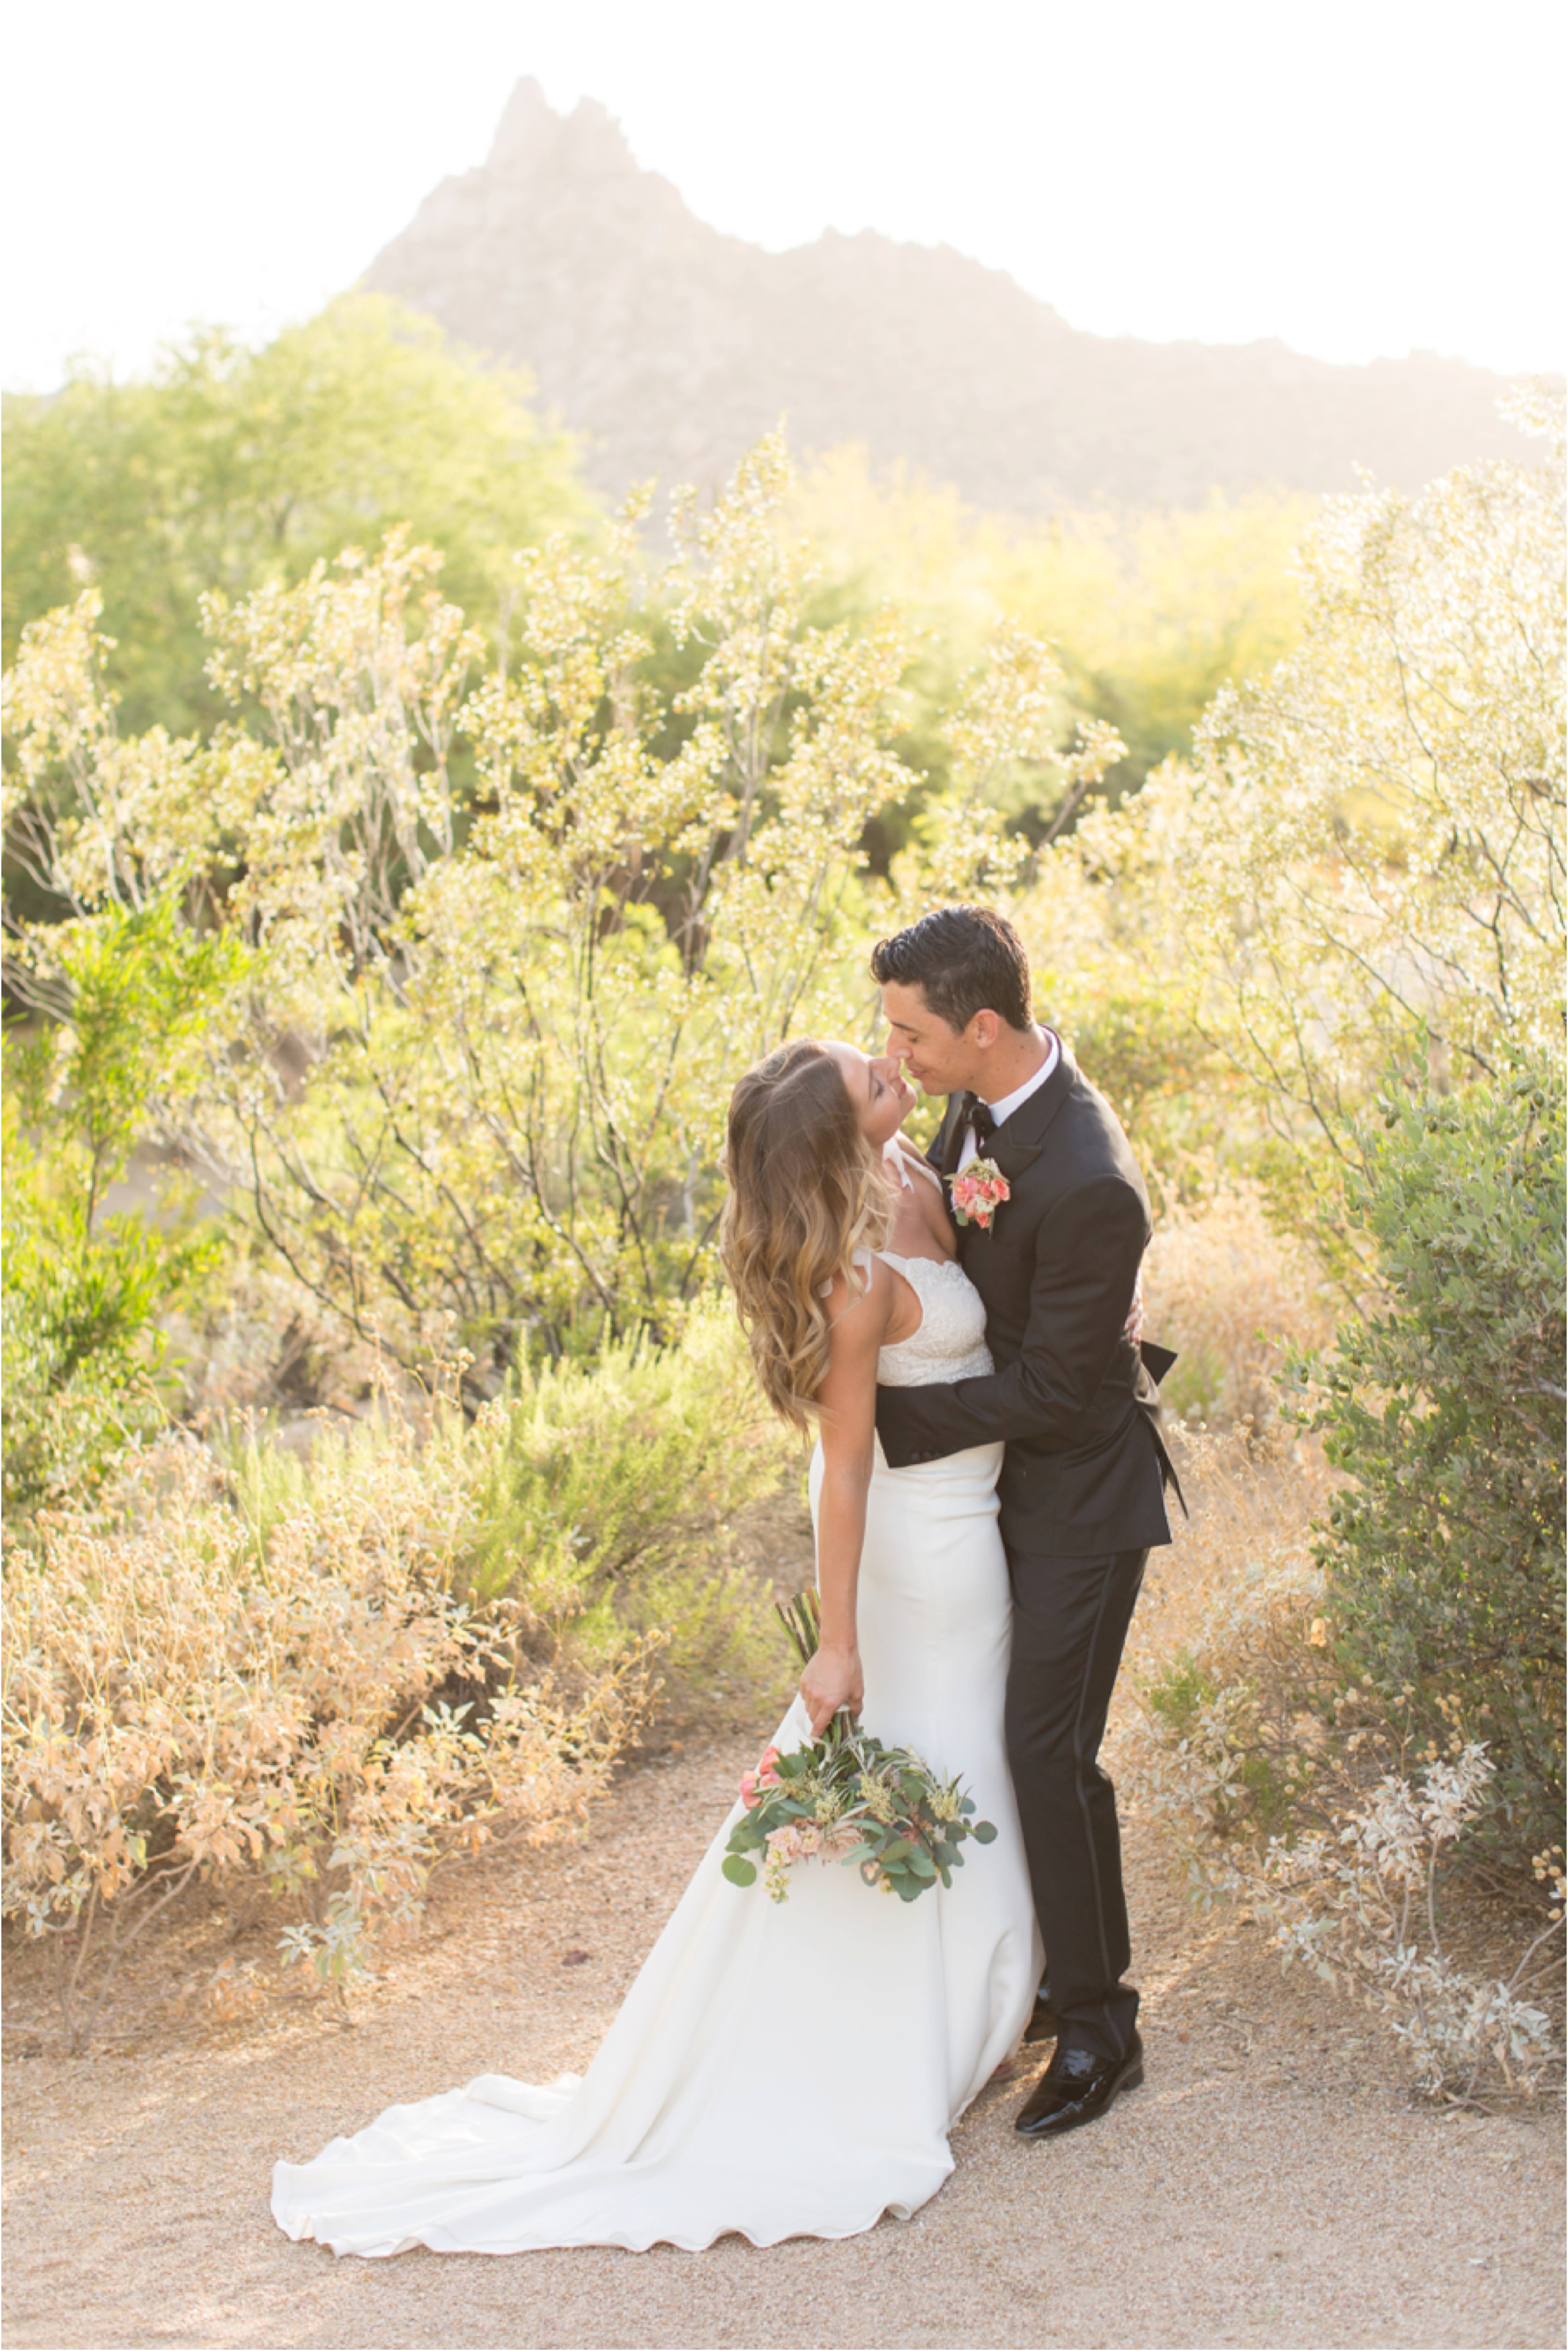 Four Seasons Arizona Destination Wedding Photographer